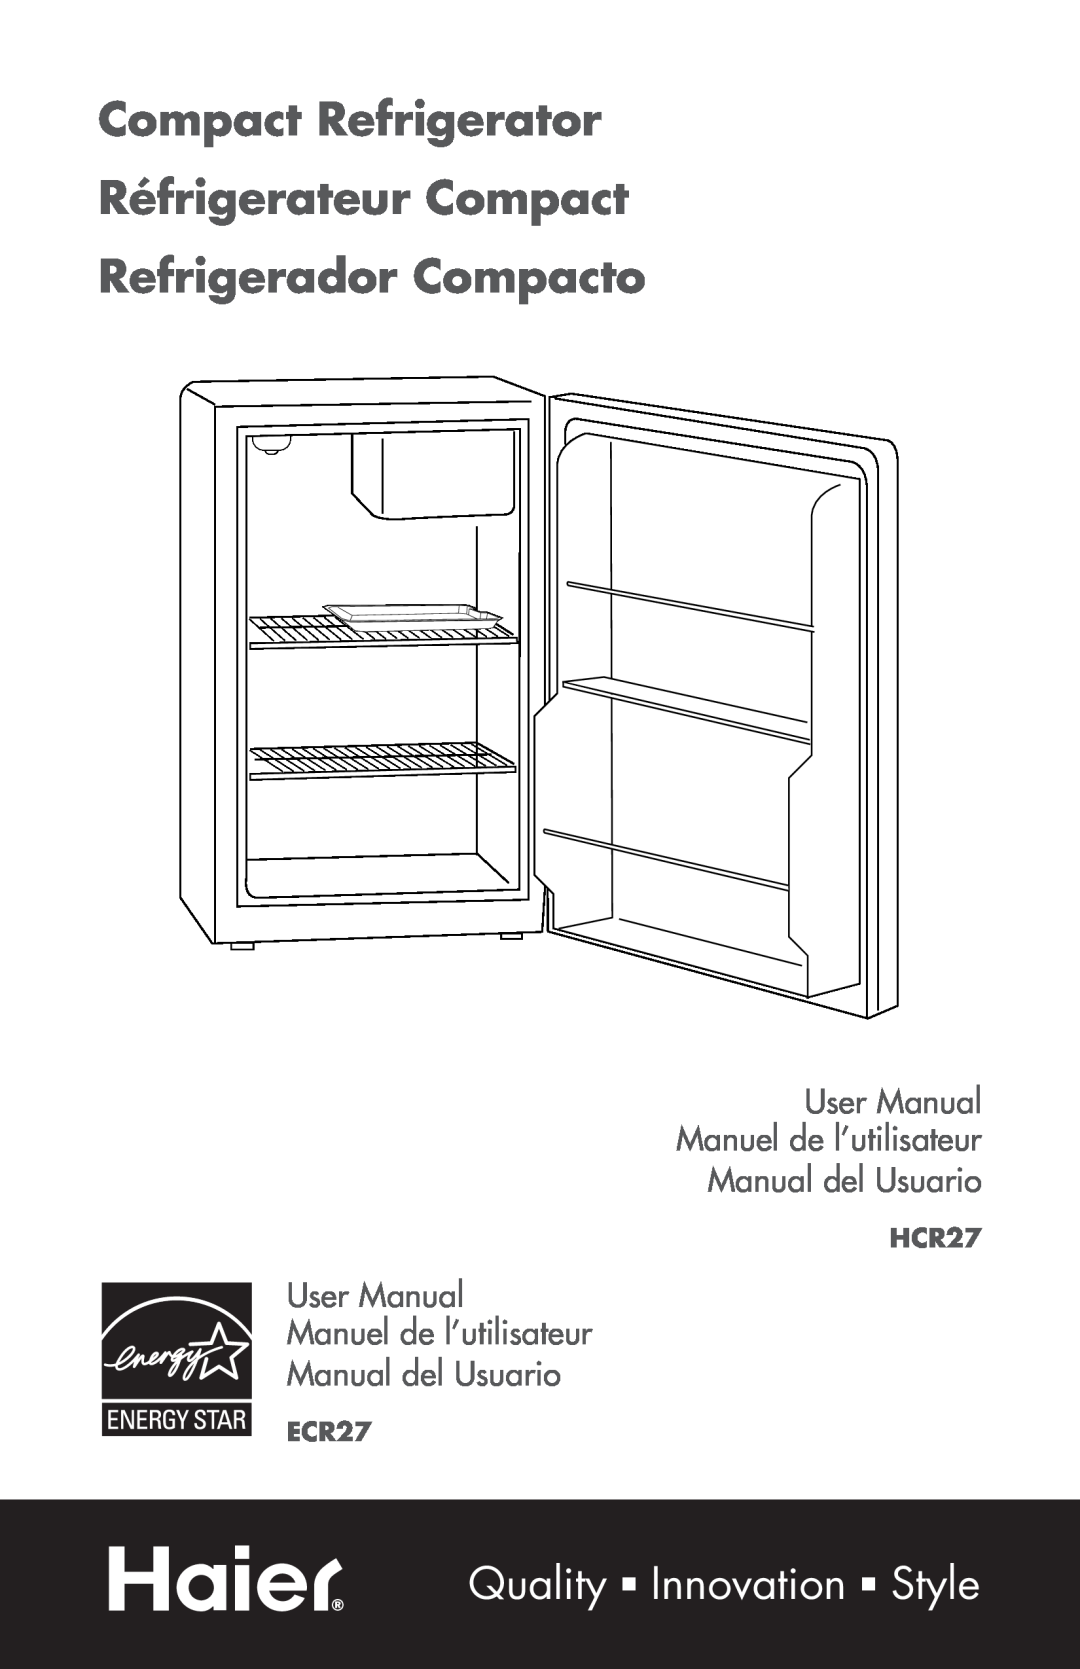 Haier ECR27B Compact Refrigerator Réfrigerateur Compact, Refrigerador Compacto, Quality n Innovation n Style, HCR27 